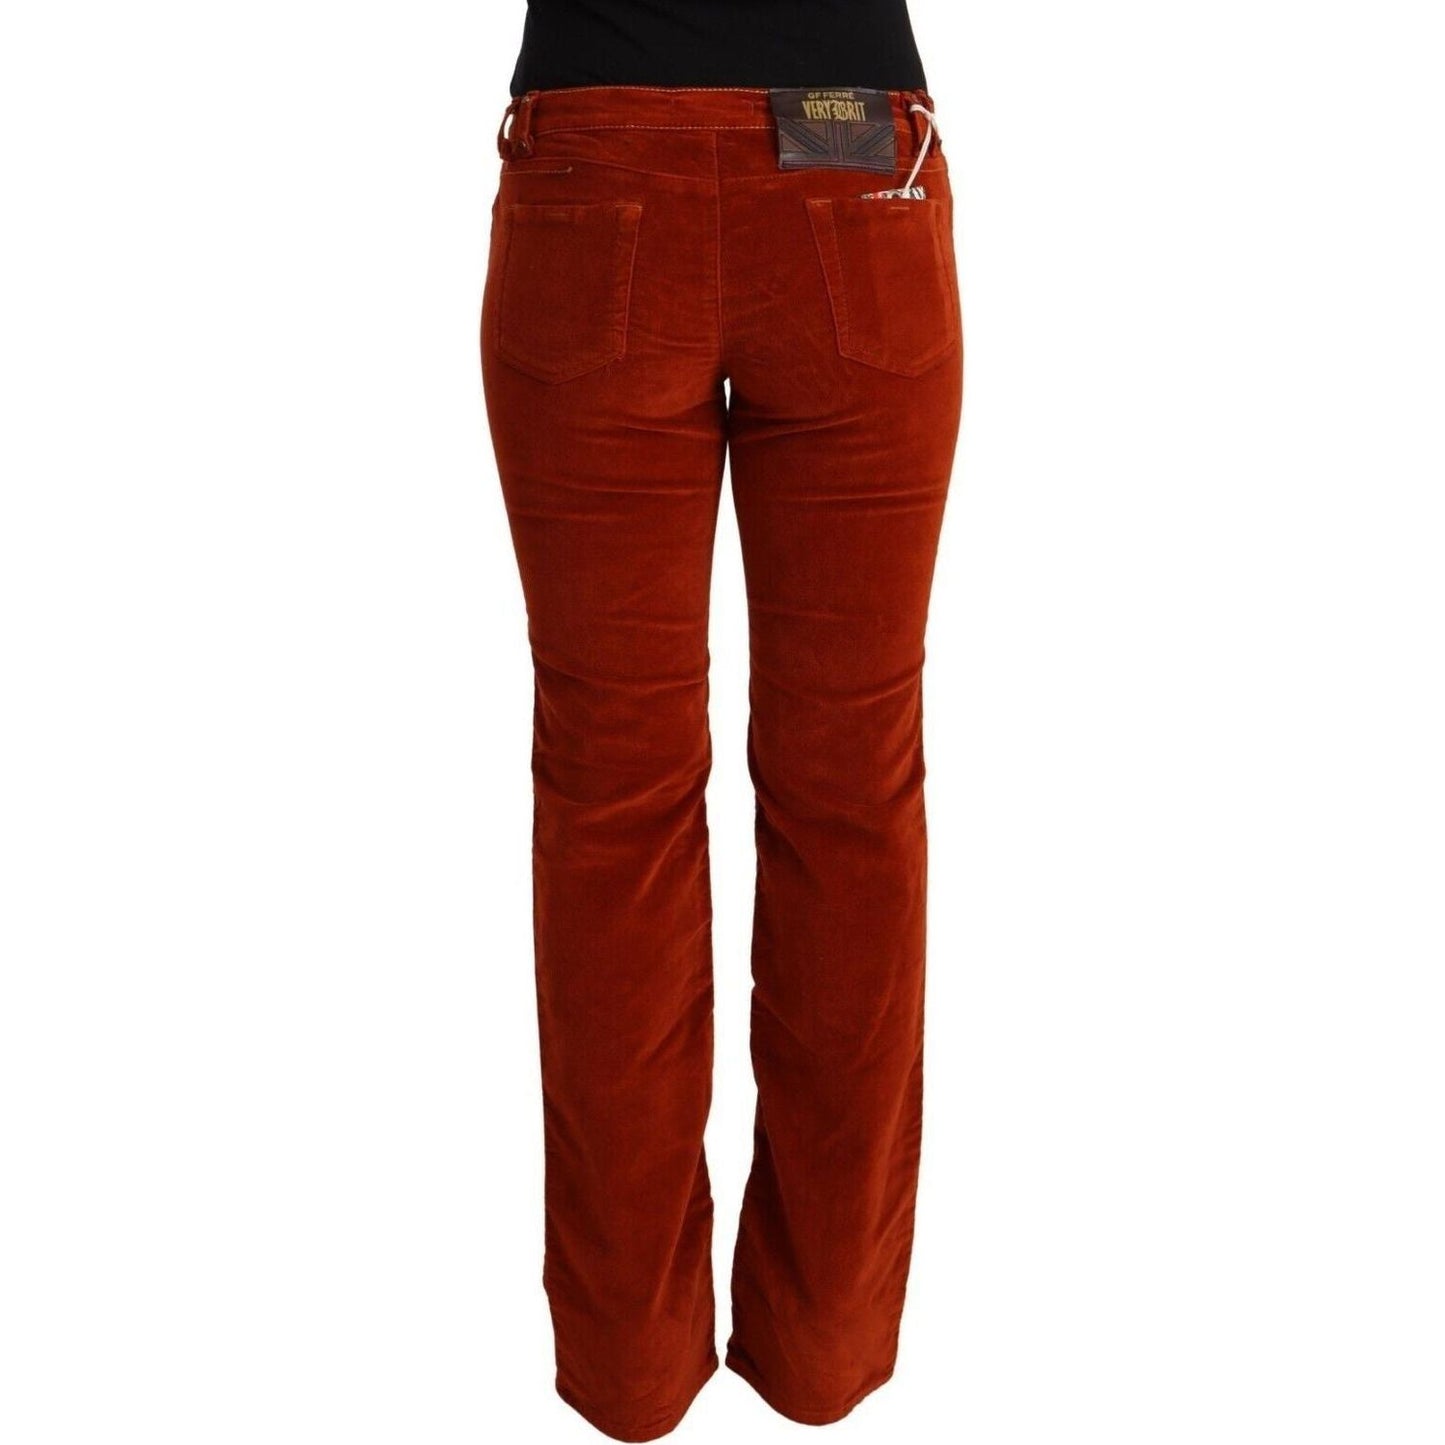 GF Ferre Chic Red Low Waist Straight Cut Jeans red-cotton-low-waist-straight-casual-jeans s-l1600-29-5-08c2bac2-617.jpg